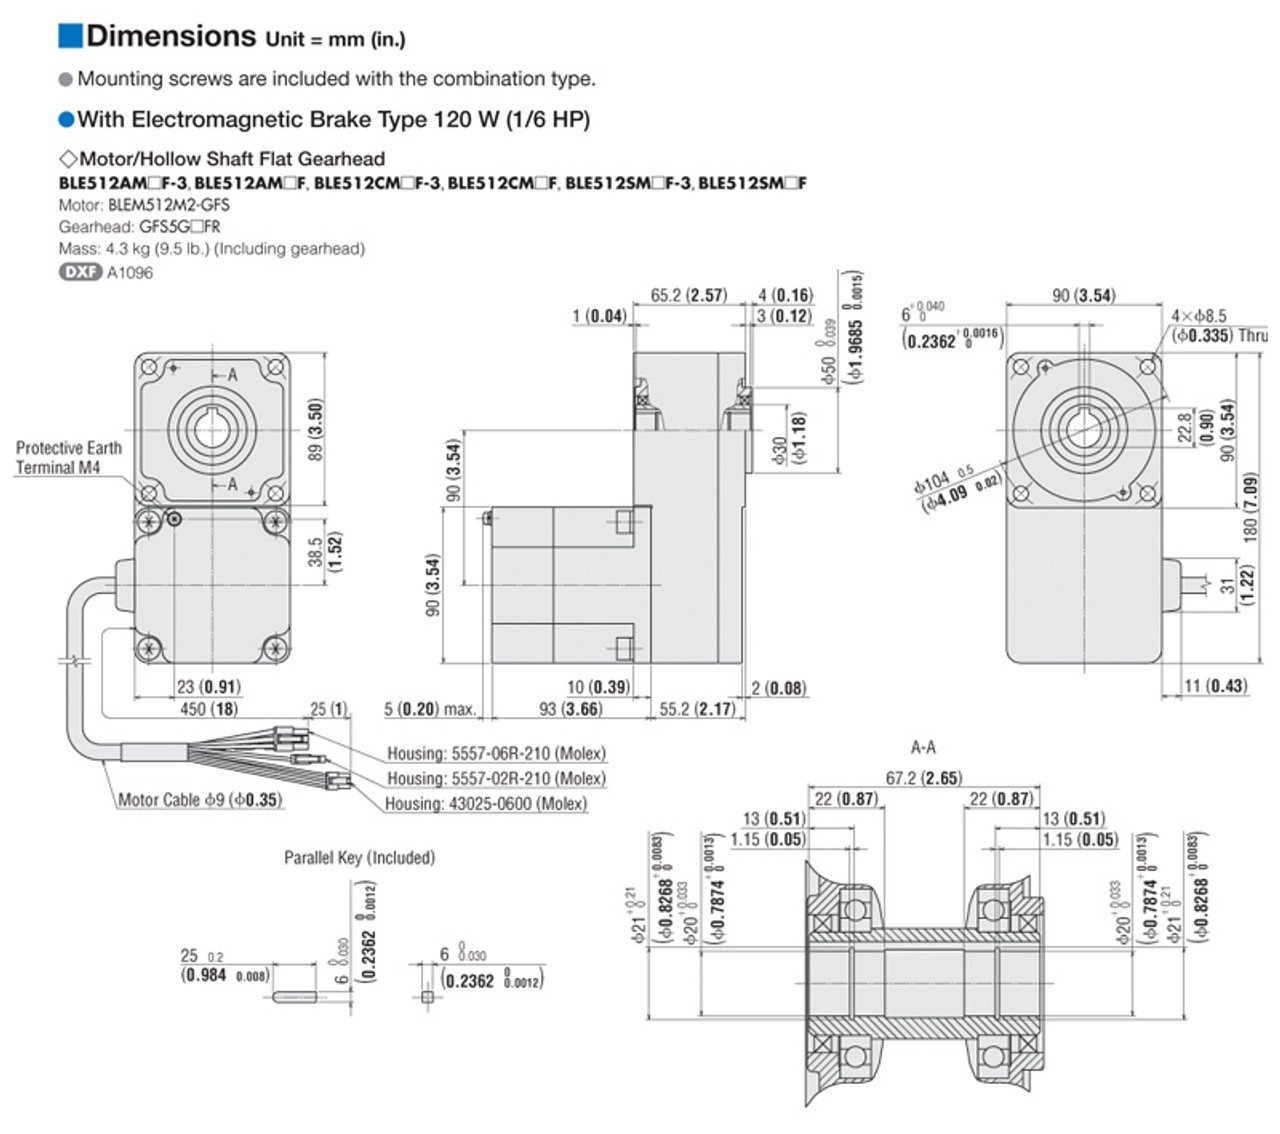 BLEM512M2-GFS / GFS5G20FR - Dimensions